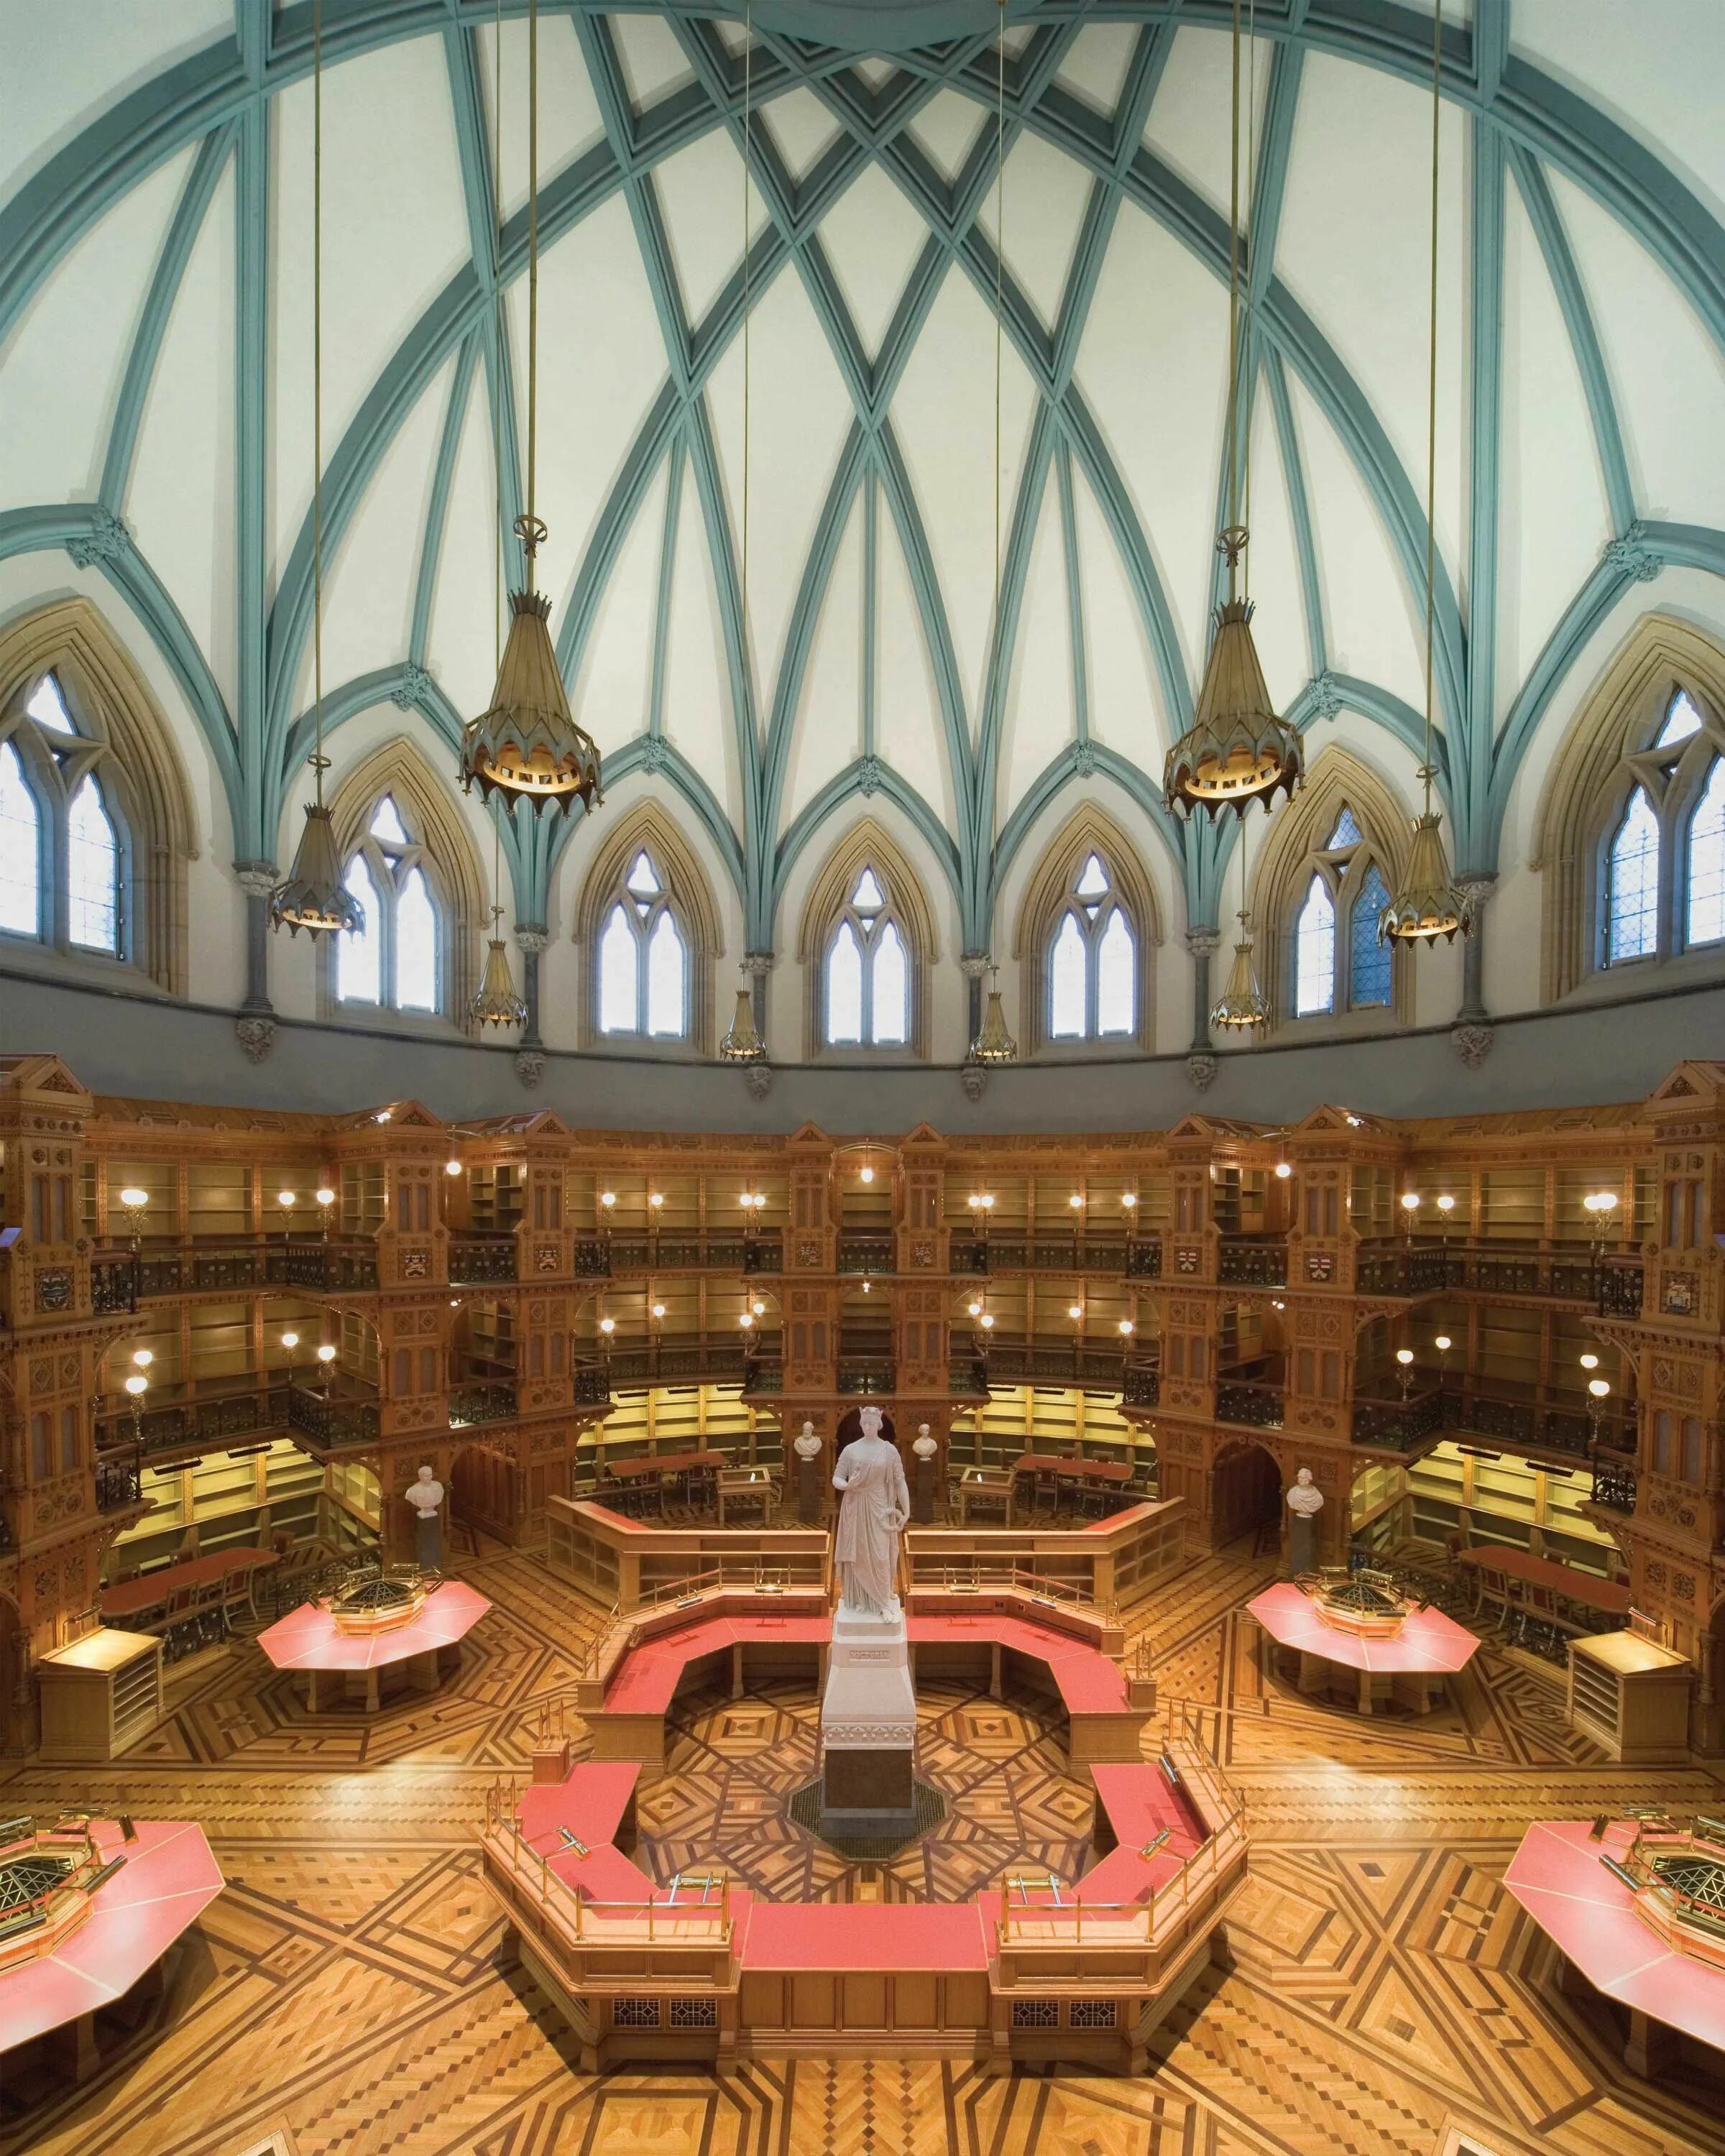 Attachment library. Оттава библиотека парламента. Парламентская библиотека в Оттаве. Библиотека и архив Канады в Оттаве. Библиотека парламента Канады.